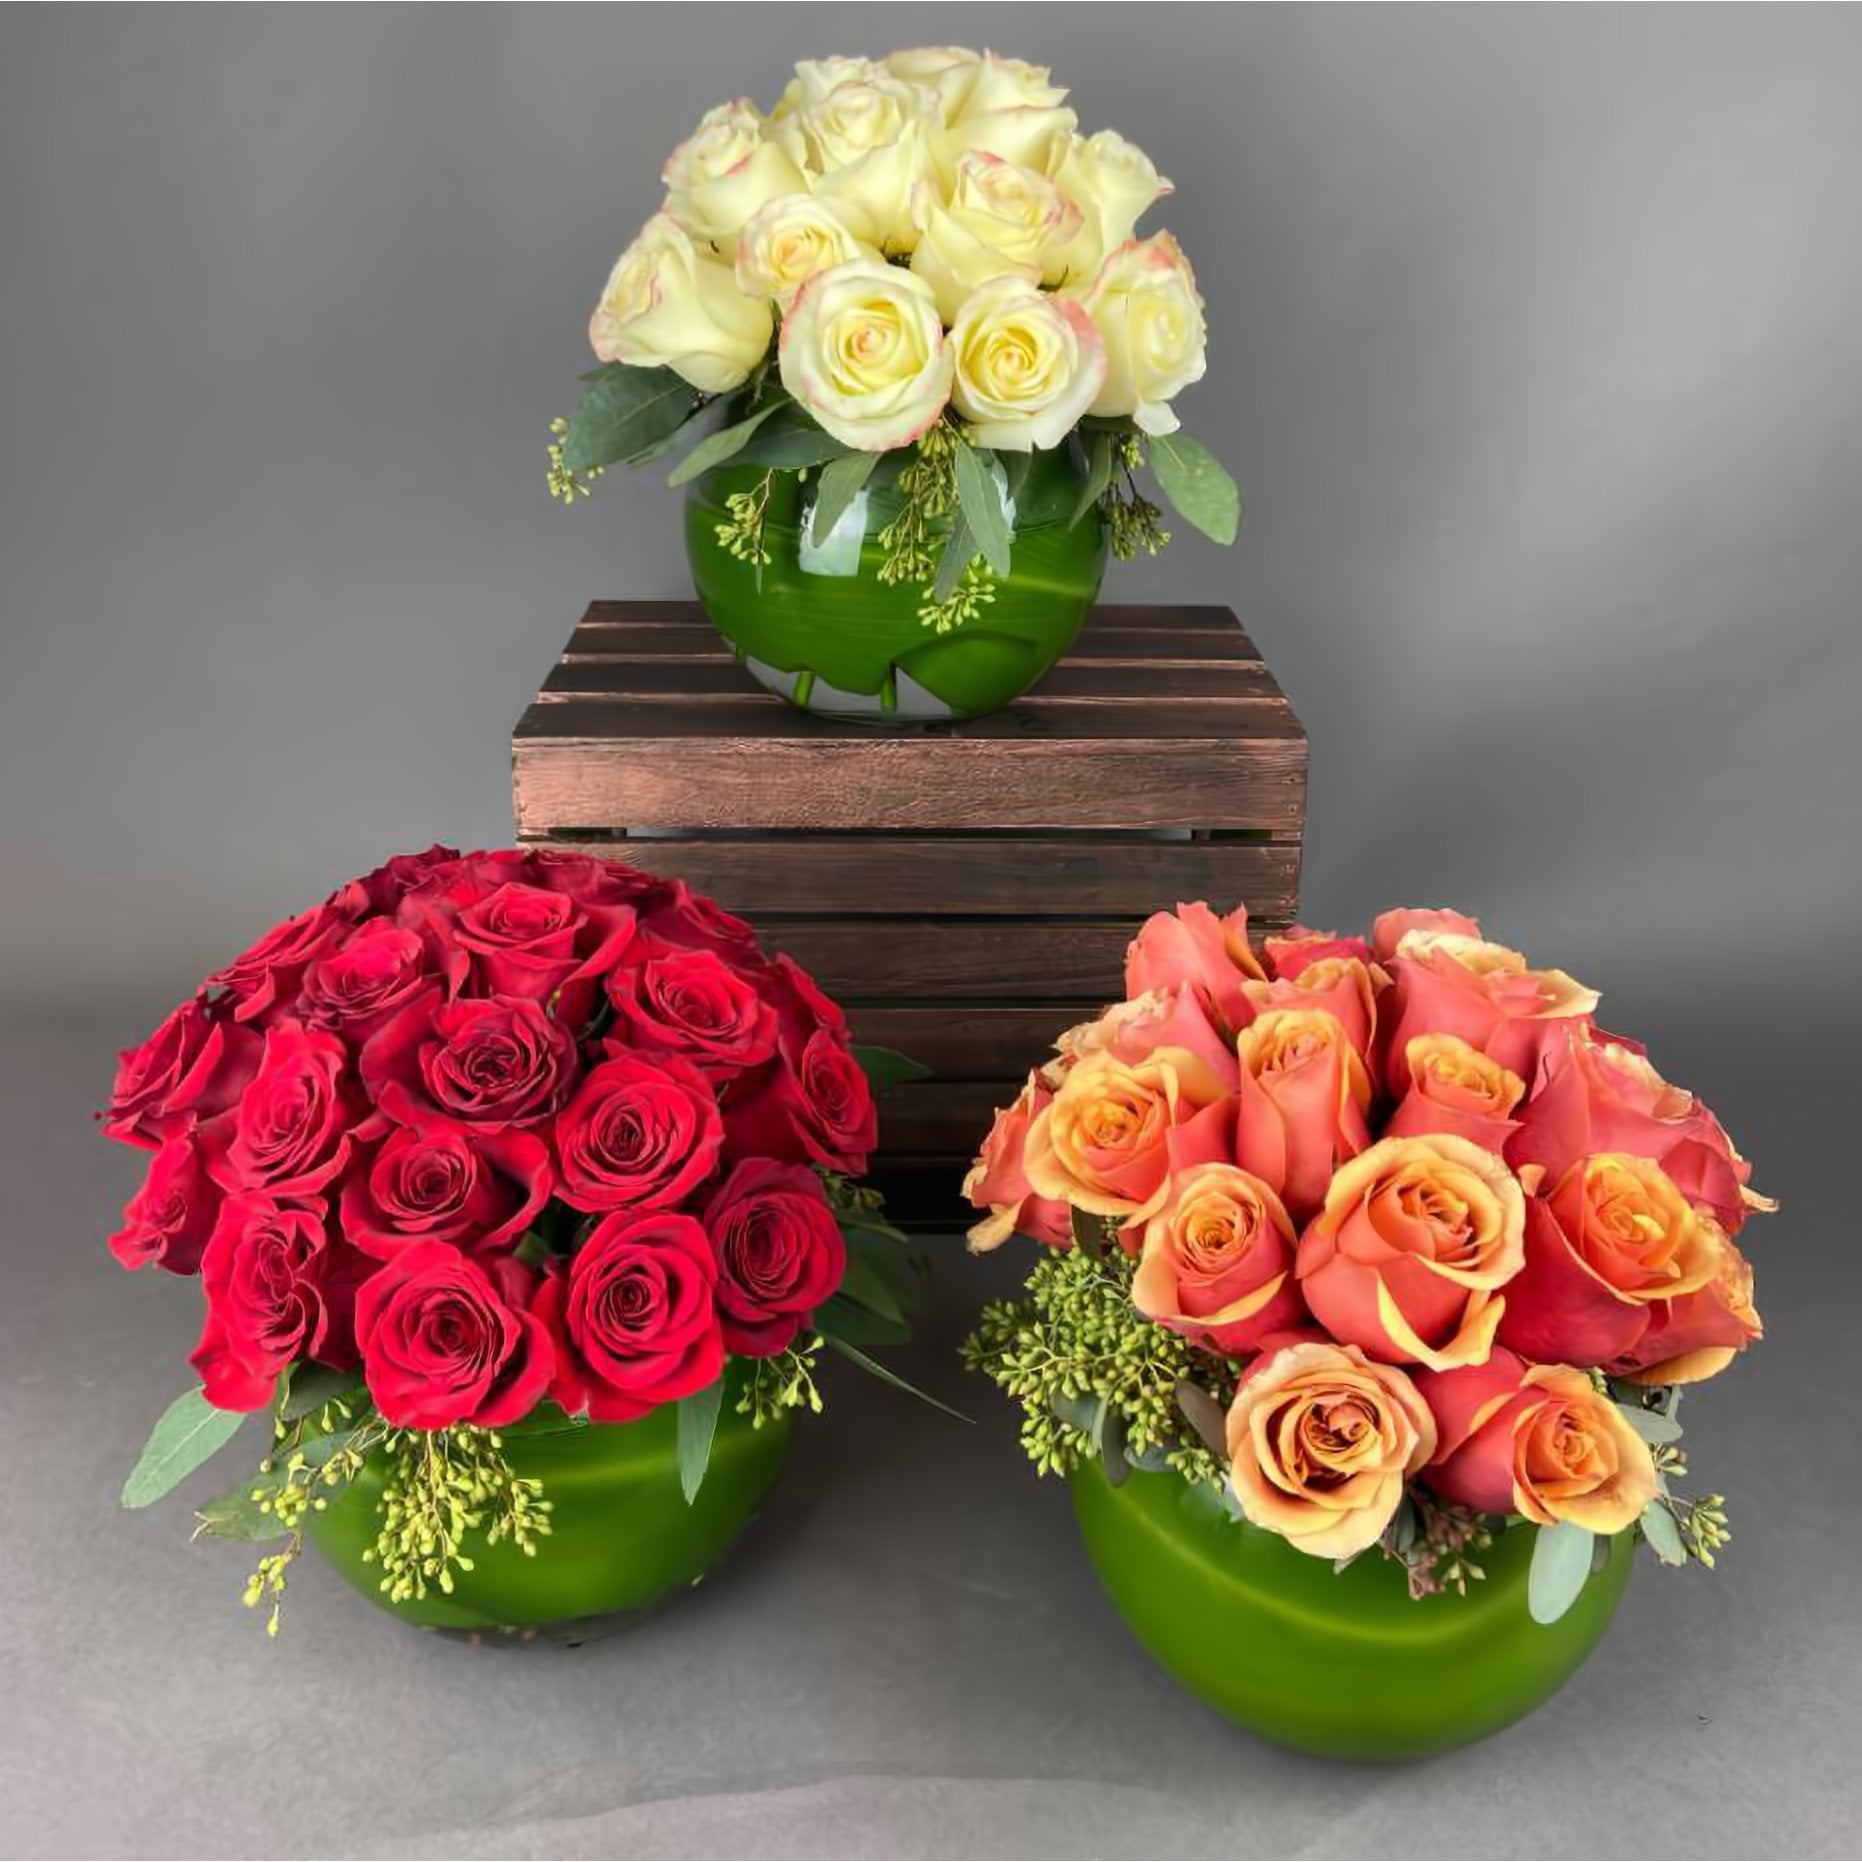 24 Rose Elegance Bubble Bowl - Floral_Arrangement - Flower Delivery NYC